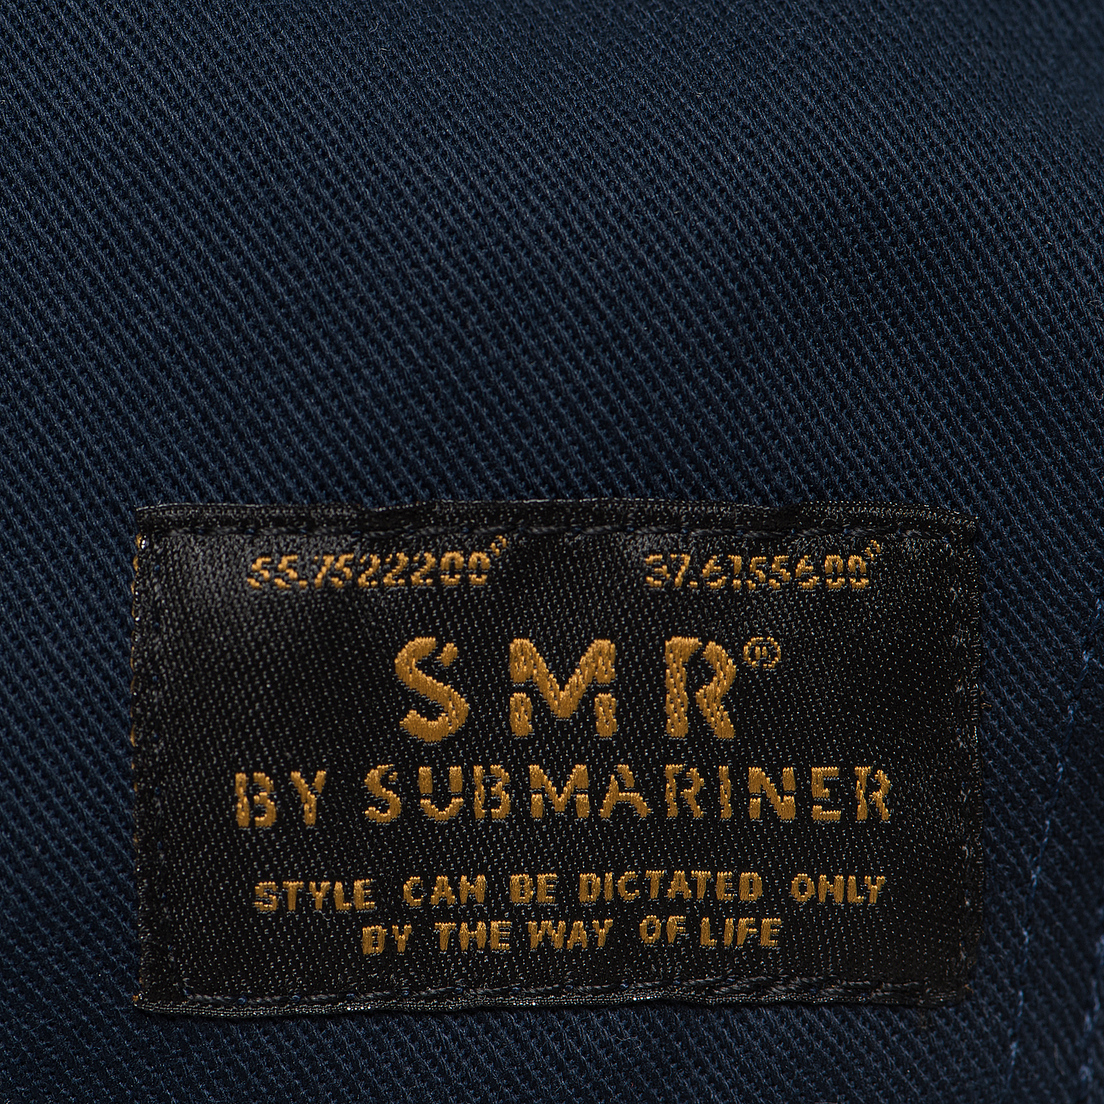 Submariner Кепка Embroidered Logo SMR